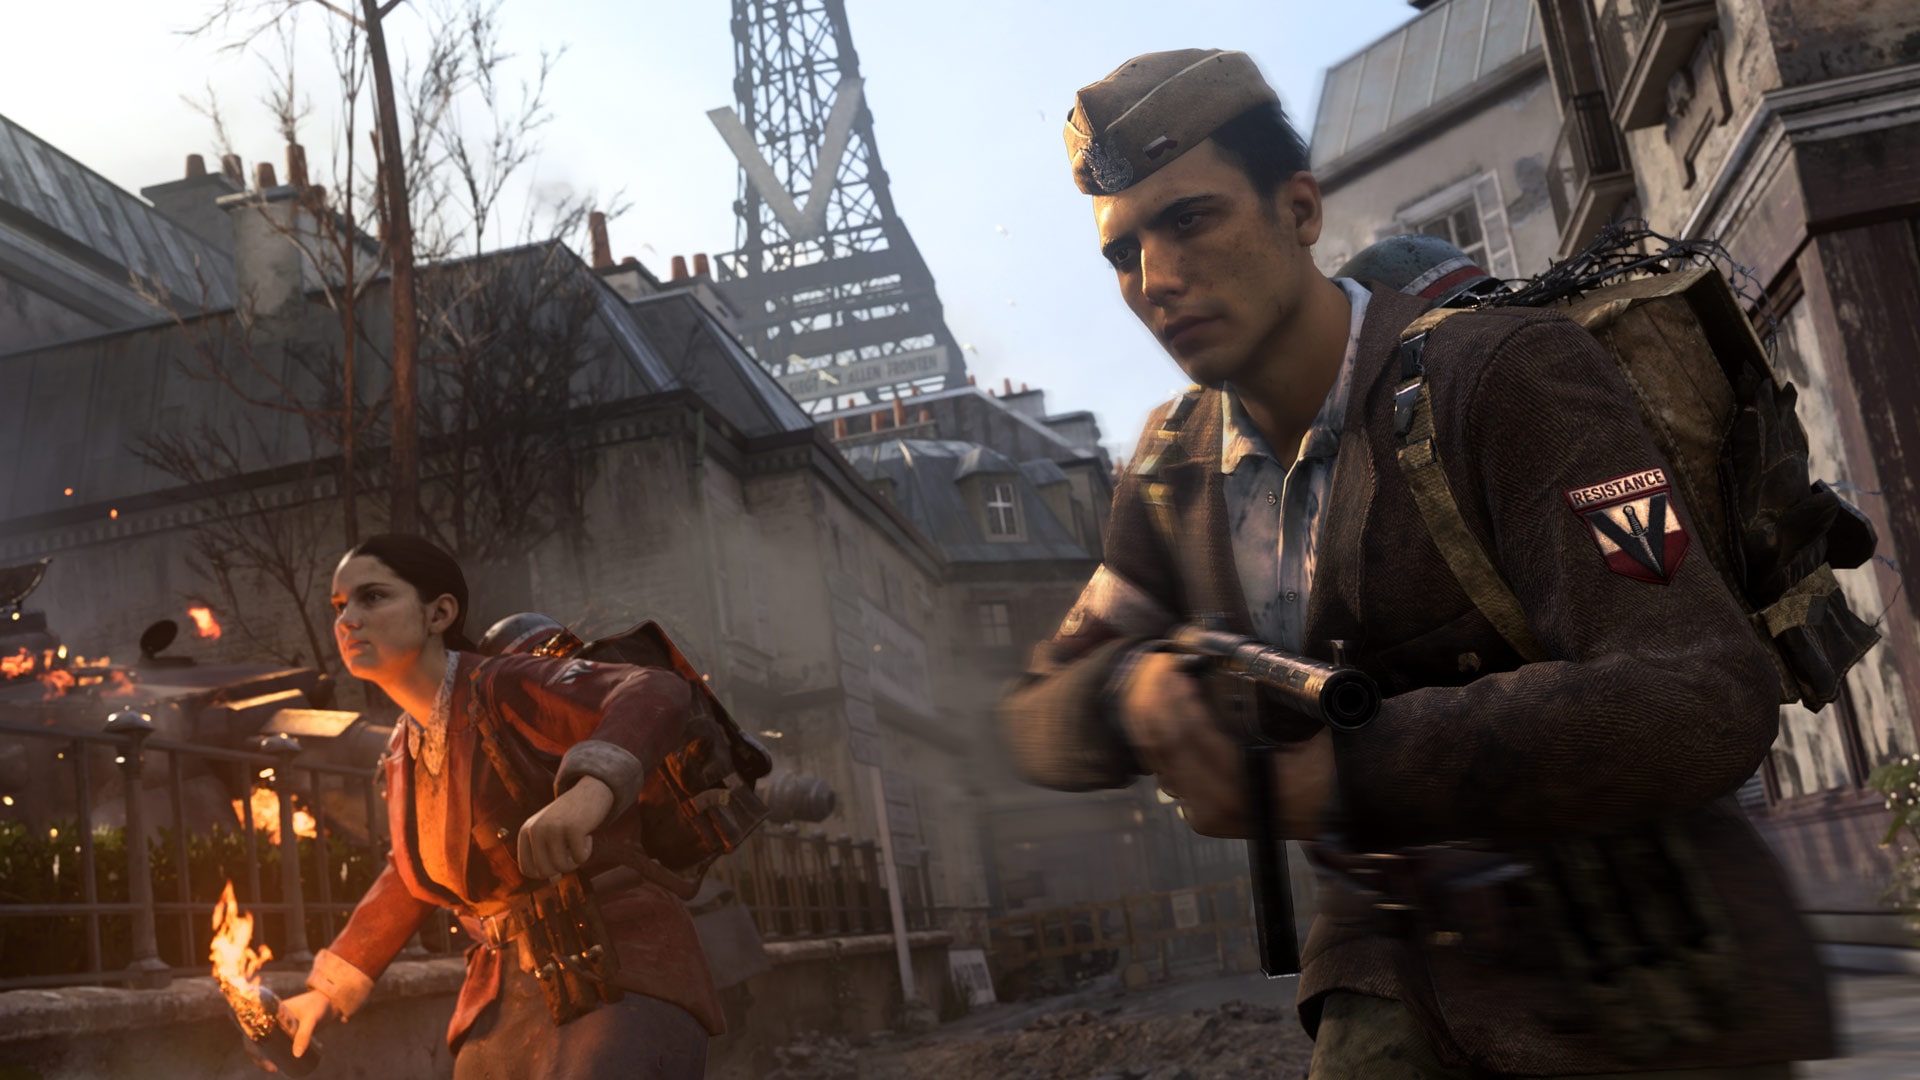 Call Of Duty: WWII — Season Pass on PS4 — price history, screenshots,  discounts • USA